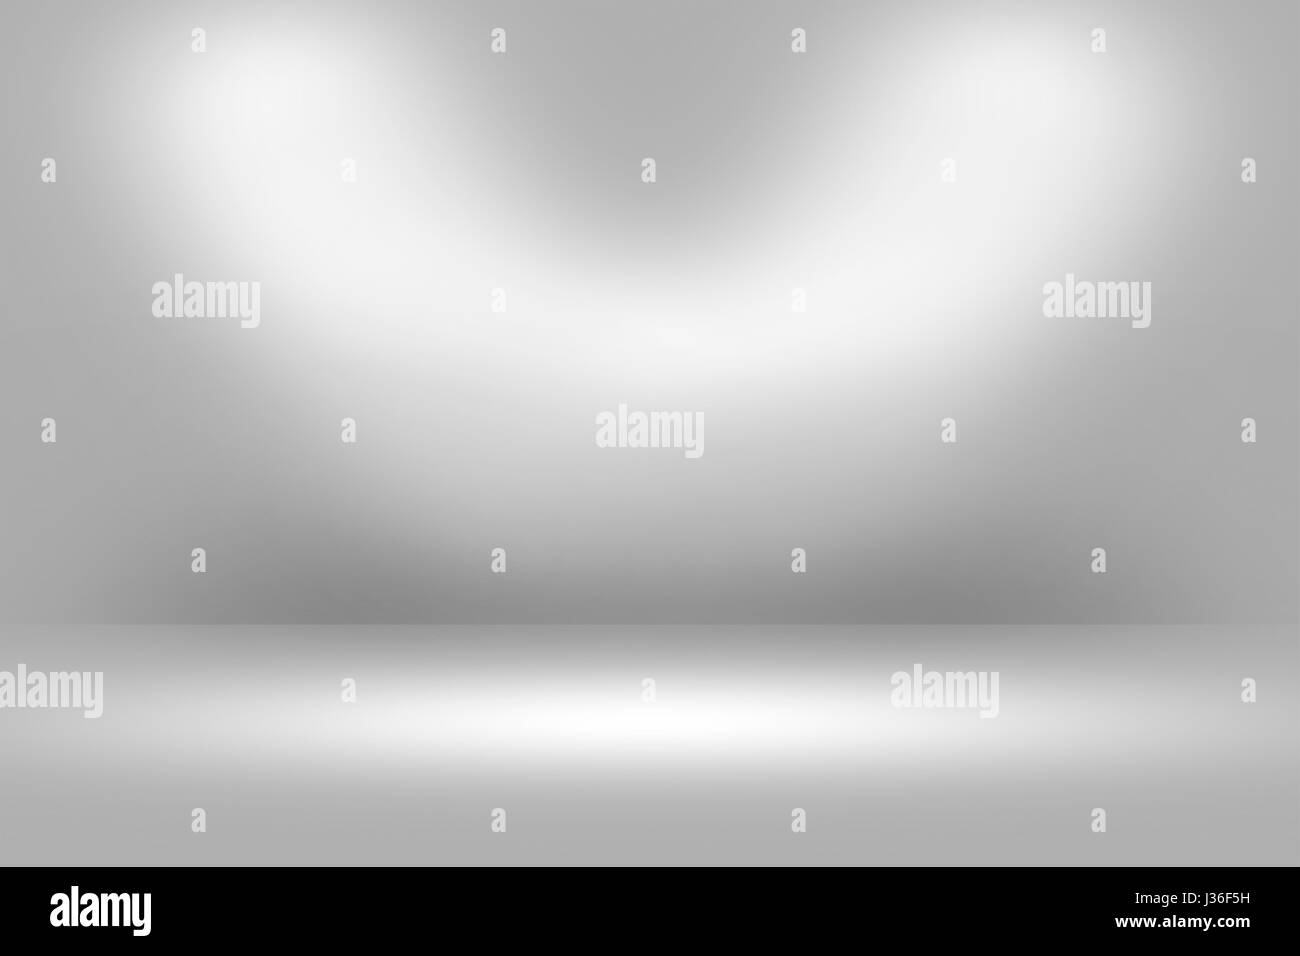 Prodotto Showscase Spotlight - sfondo nitido e chiaro infinito pavimento bianco Foto Stock